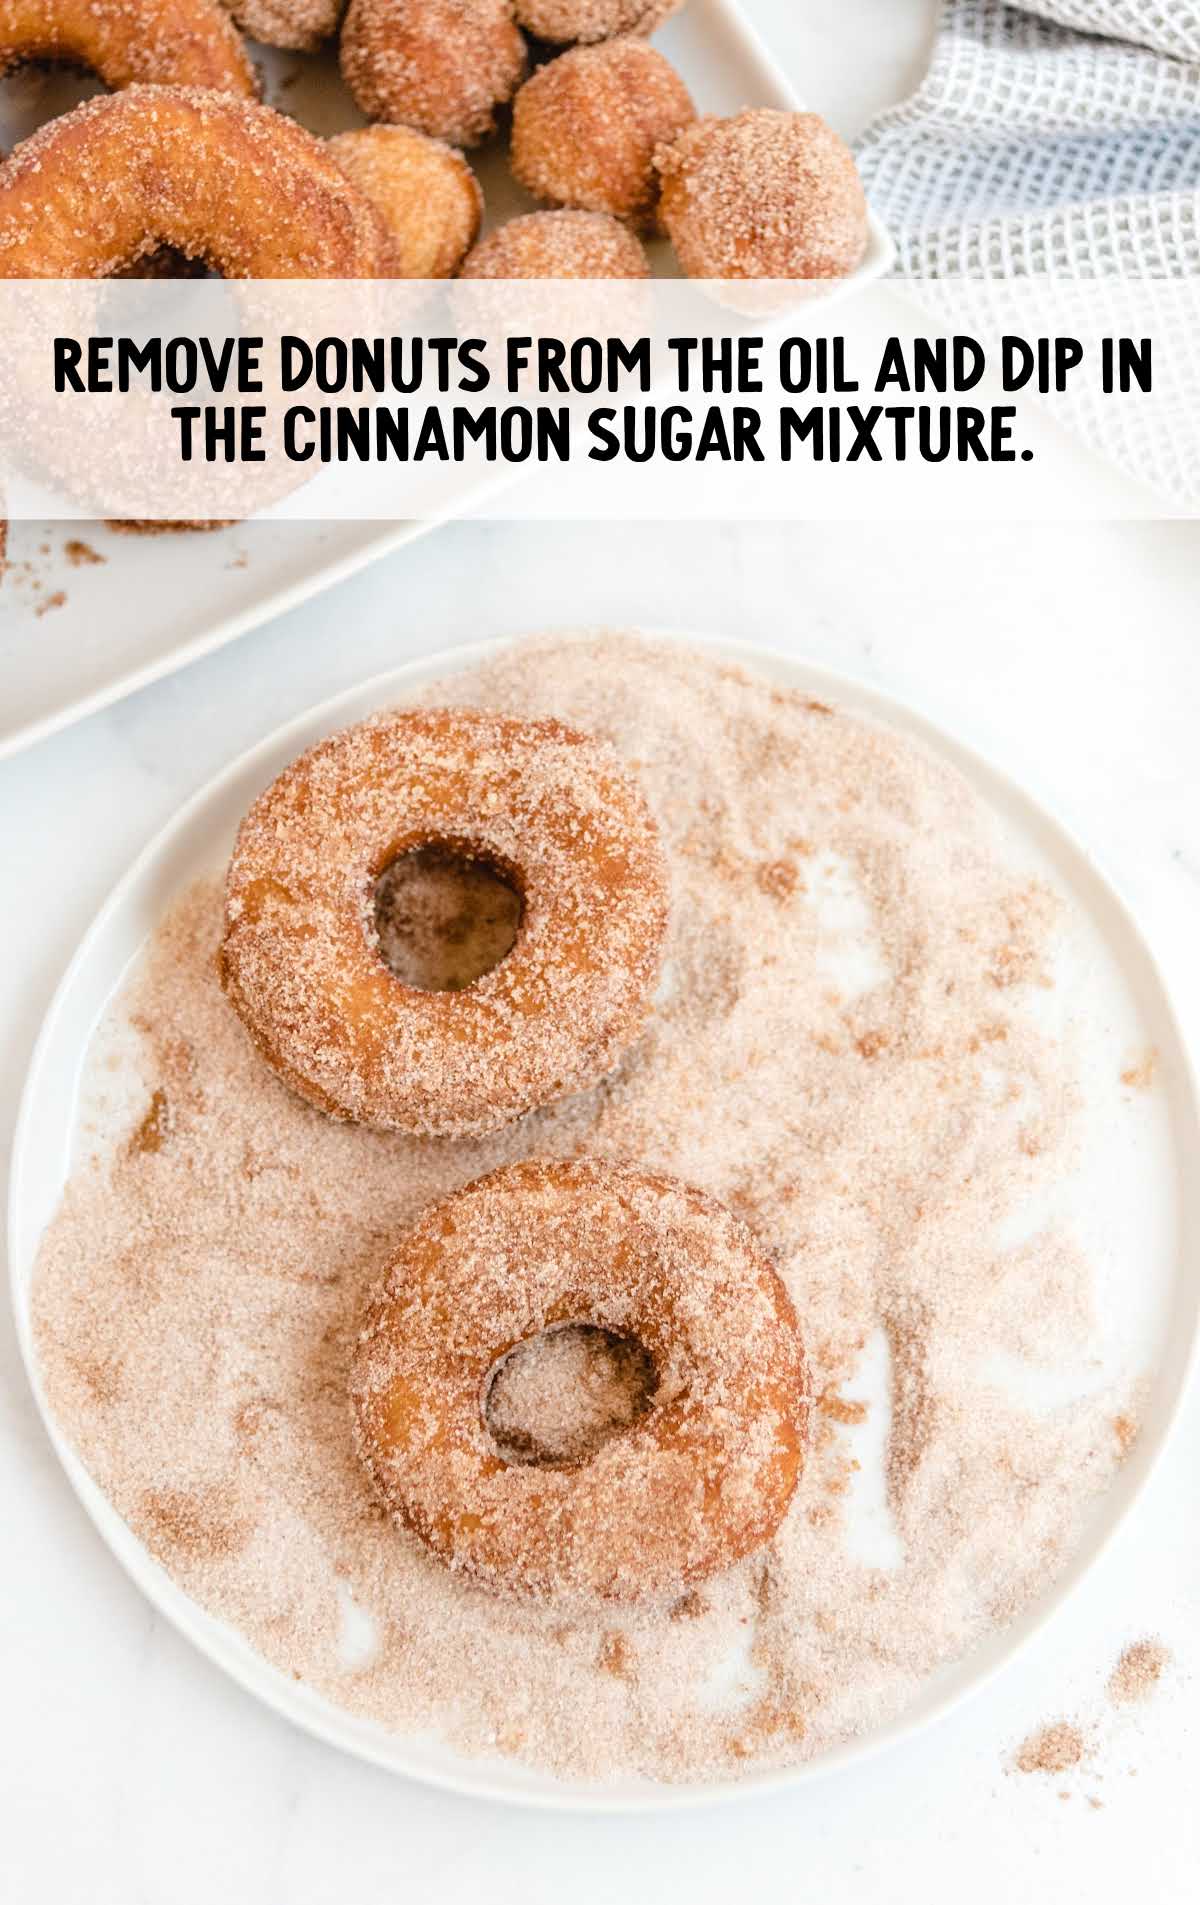 donuts coated in a cinnamon sugar mixture